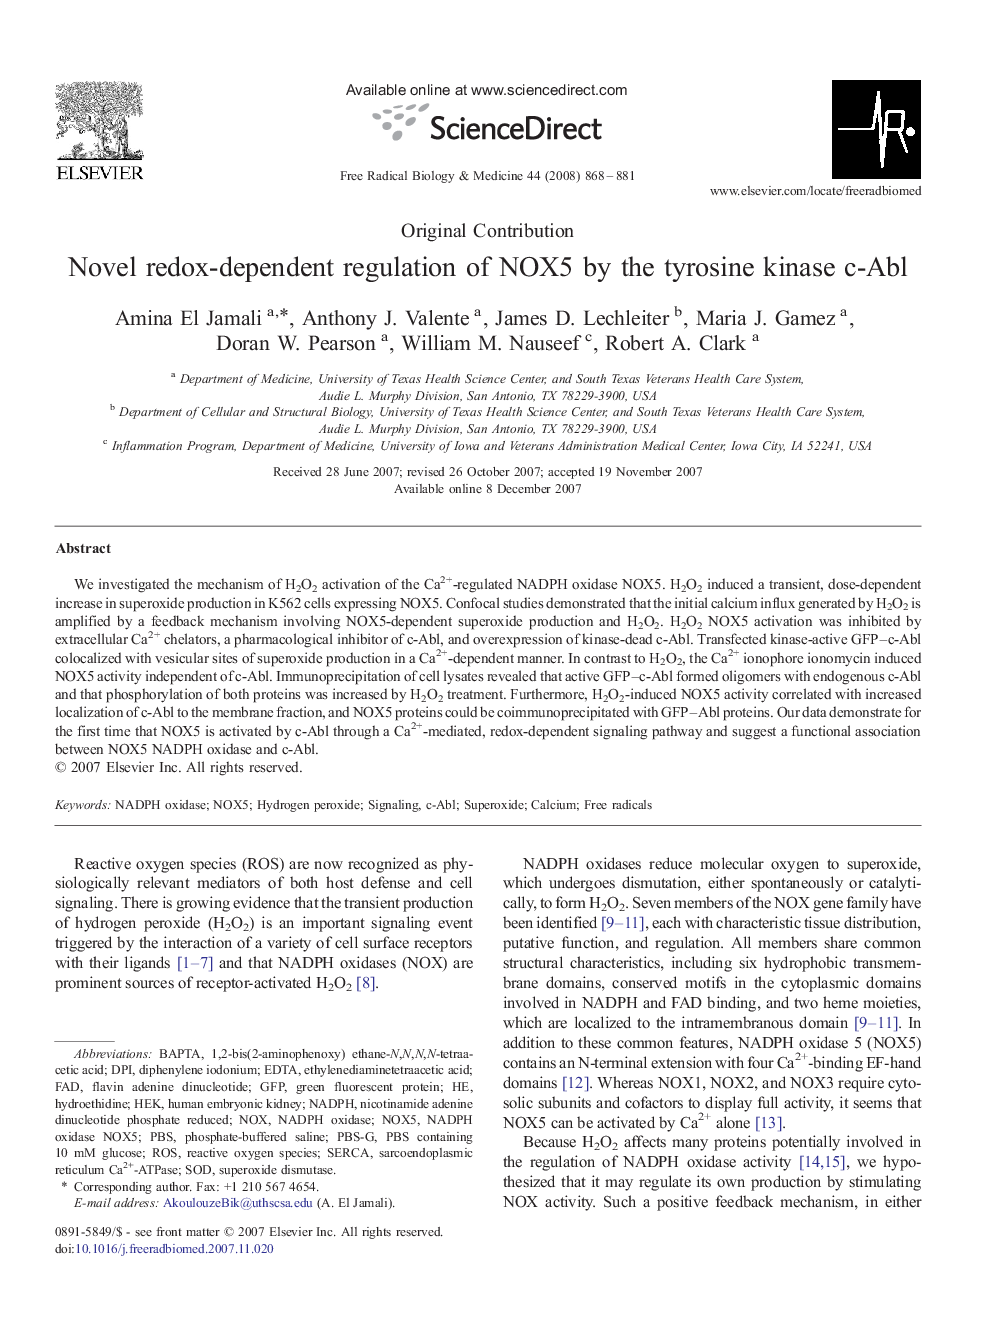 Novel redox-dependent regulation of NOX5 by the tyrosine kinase c-Abl